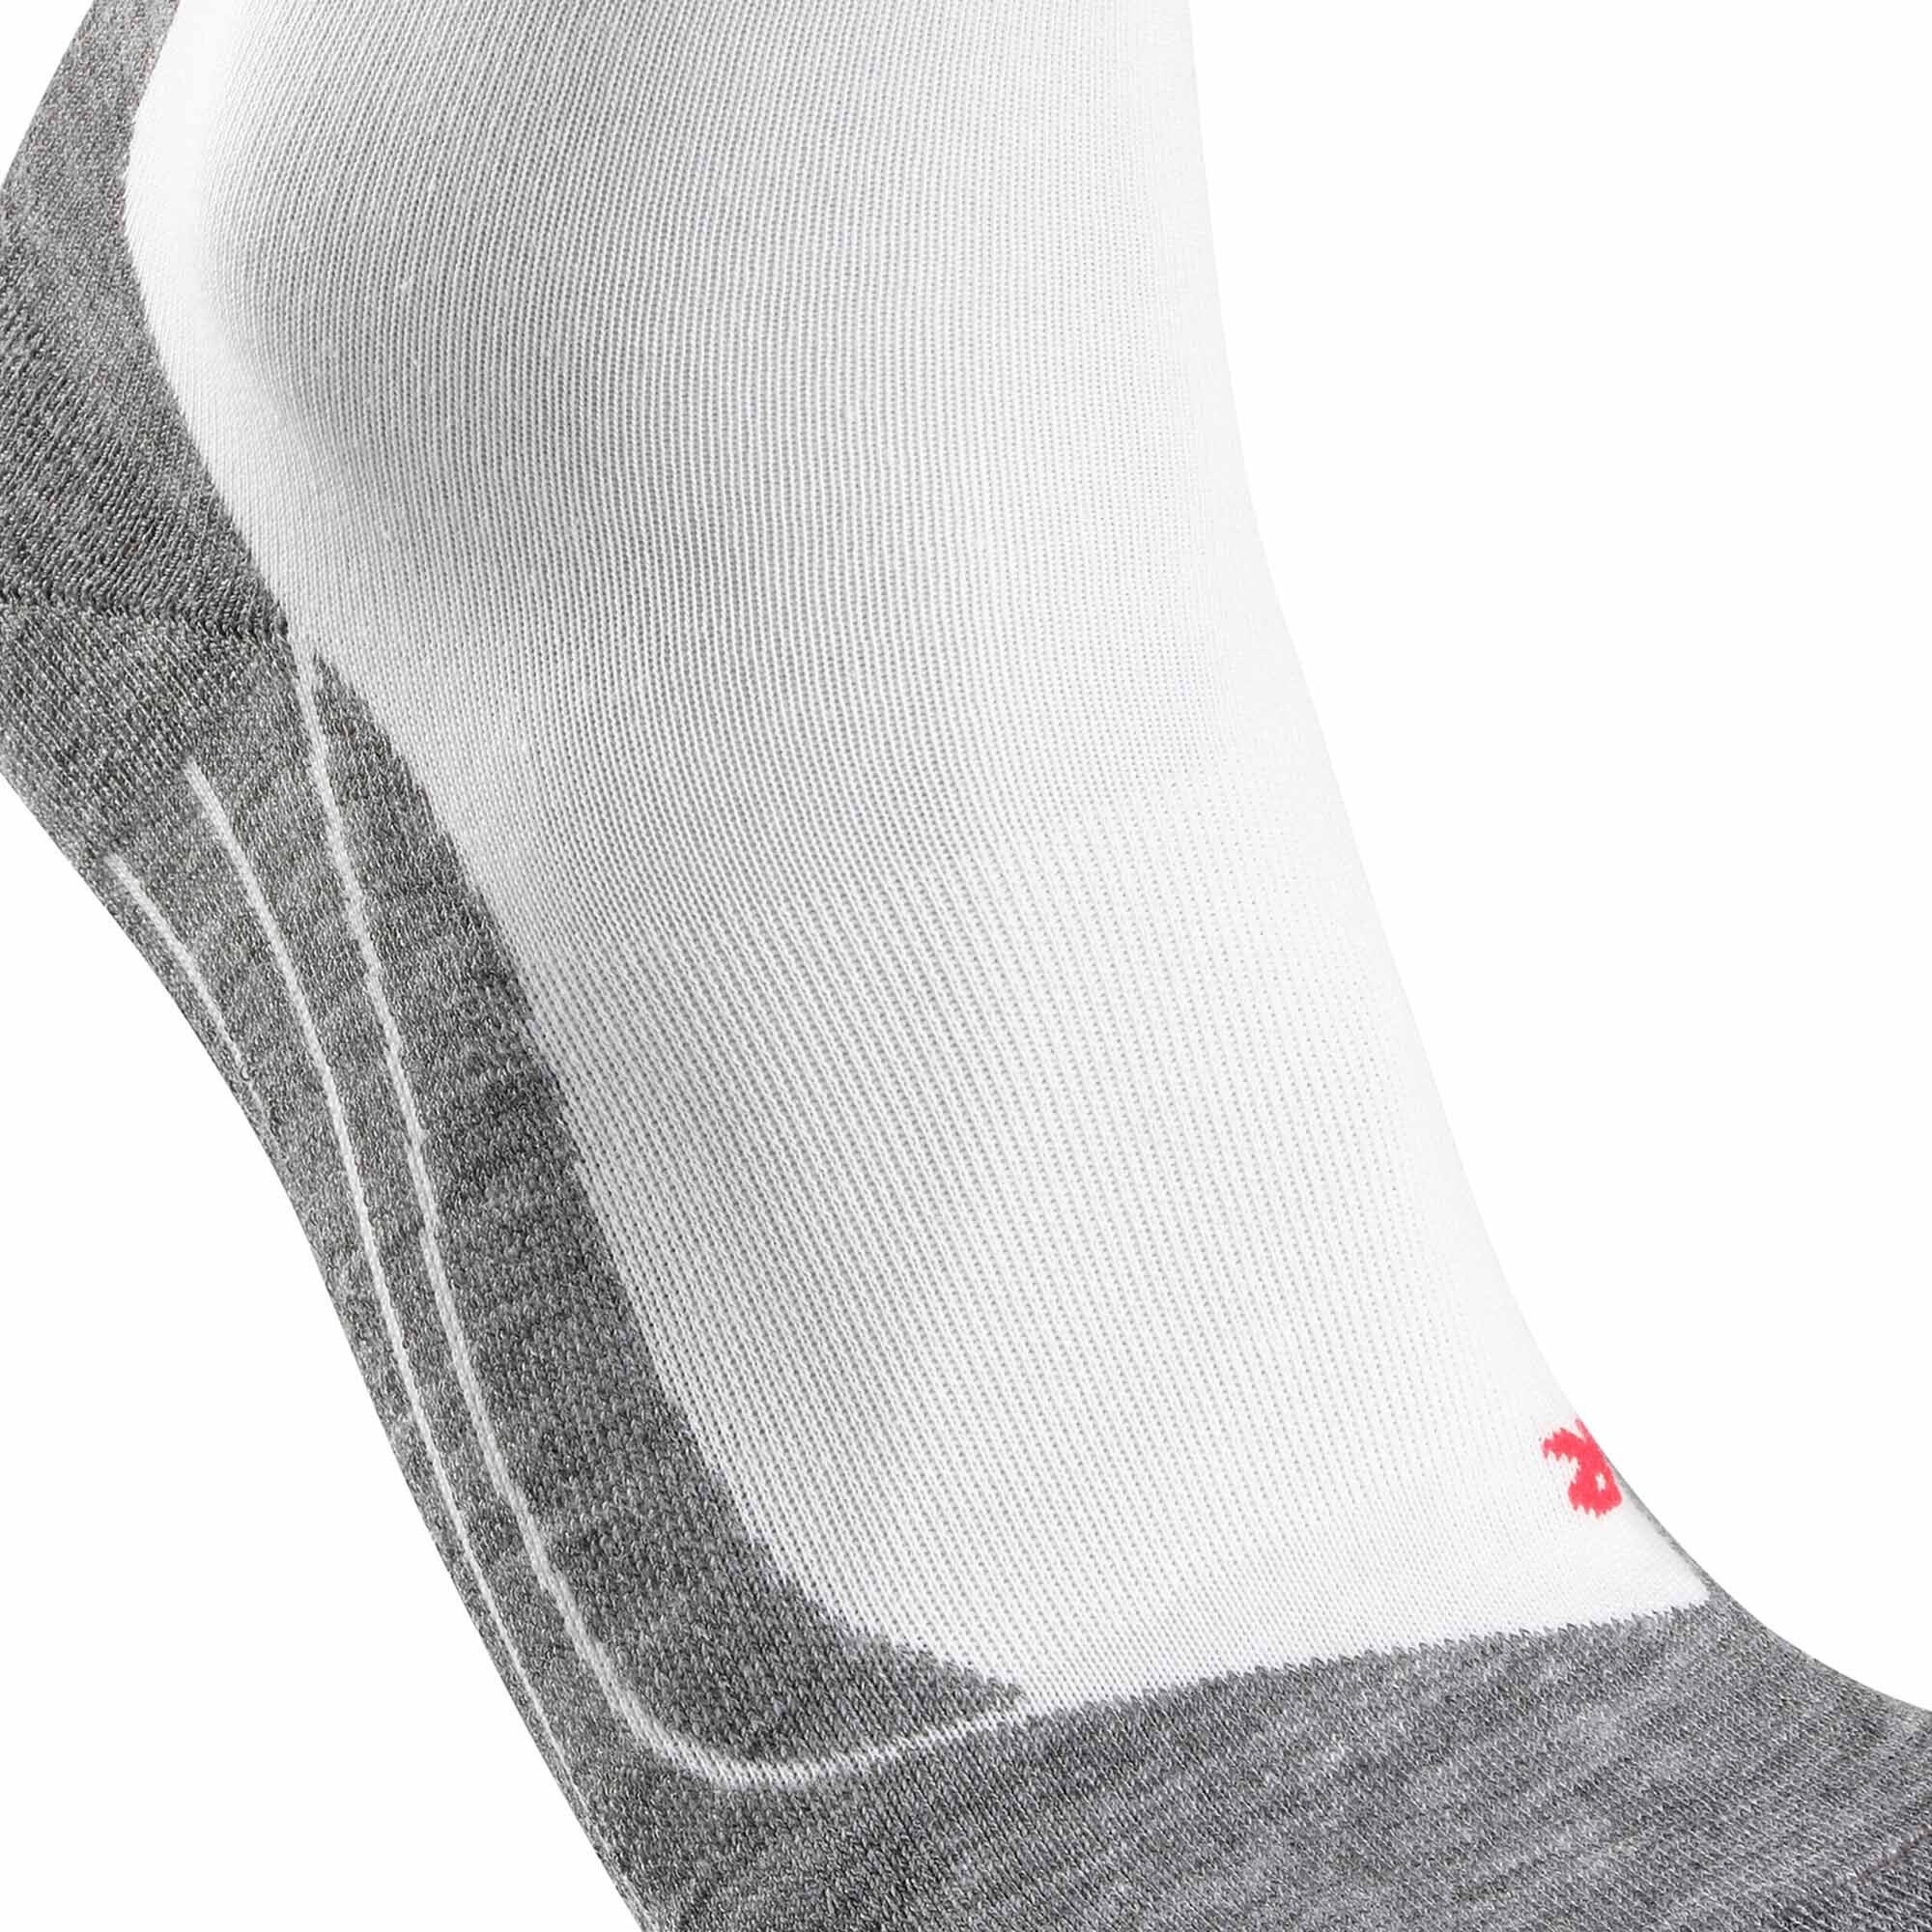 FALKE Kurzsocken Damen Socken Weiß/Grau Fitness Laufsocken, Ergonomic - (2020) Sport